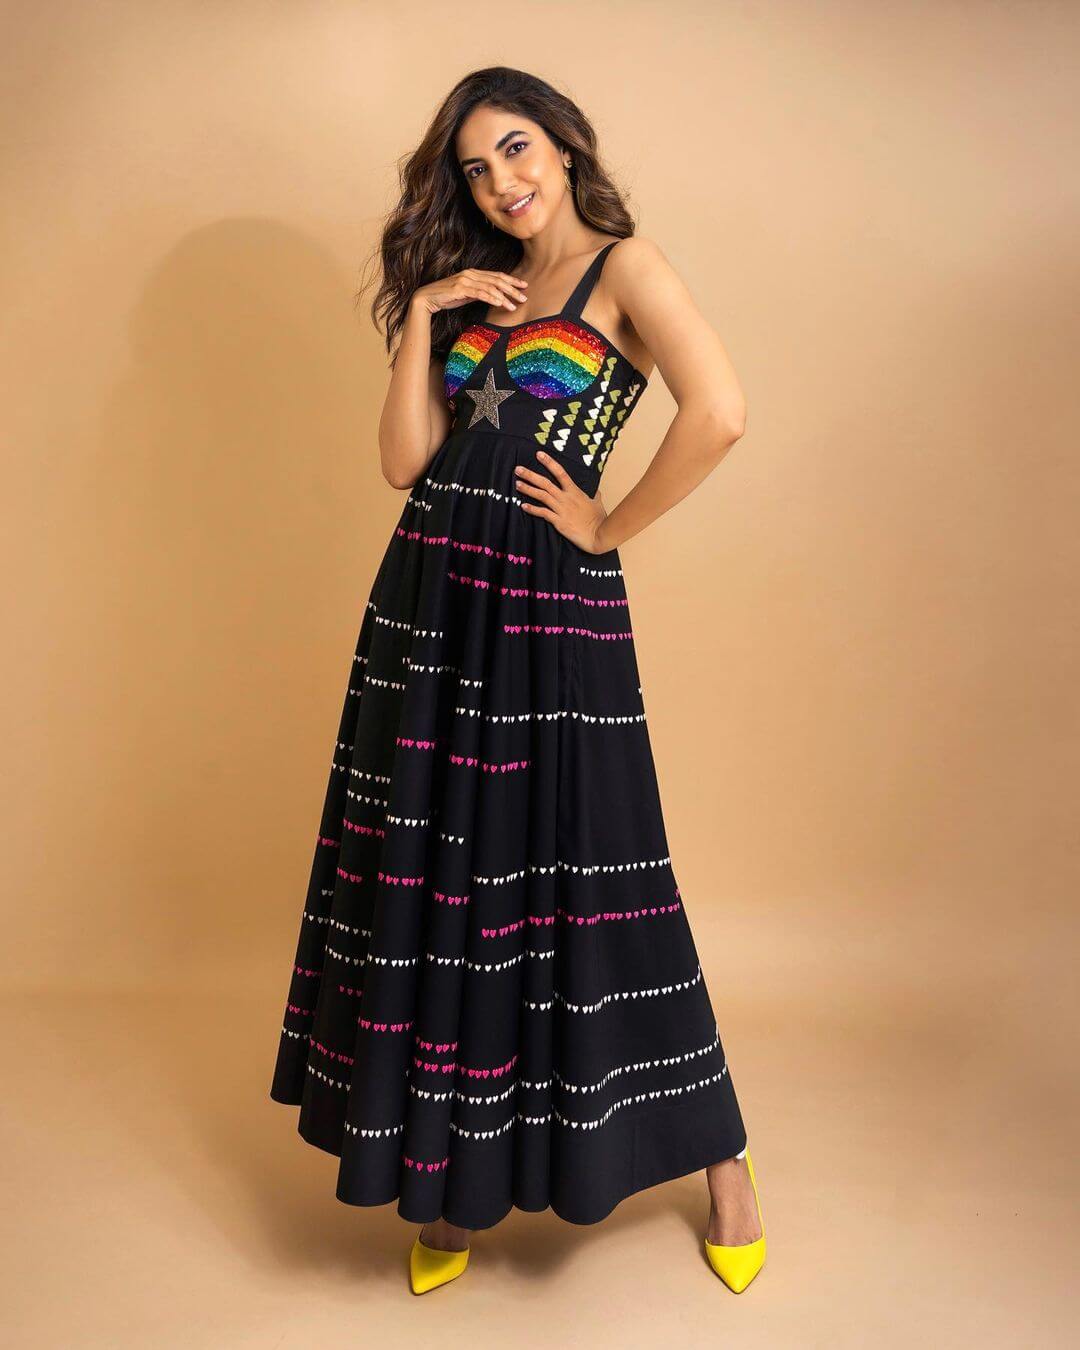 Ritu Varma Vibrant & Peppy Look In Black VIBGYOR Theme Sleeveless Long Maxi Dress